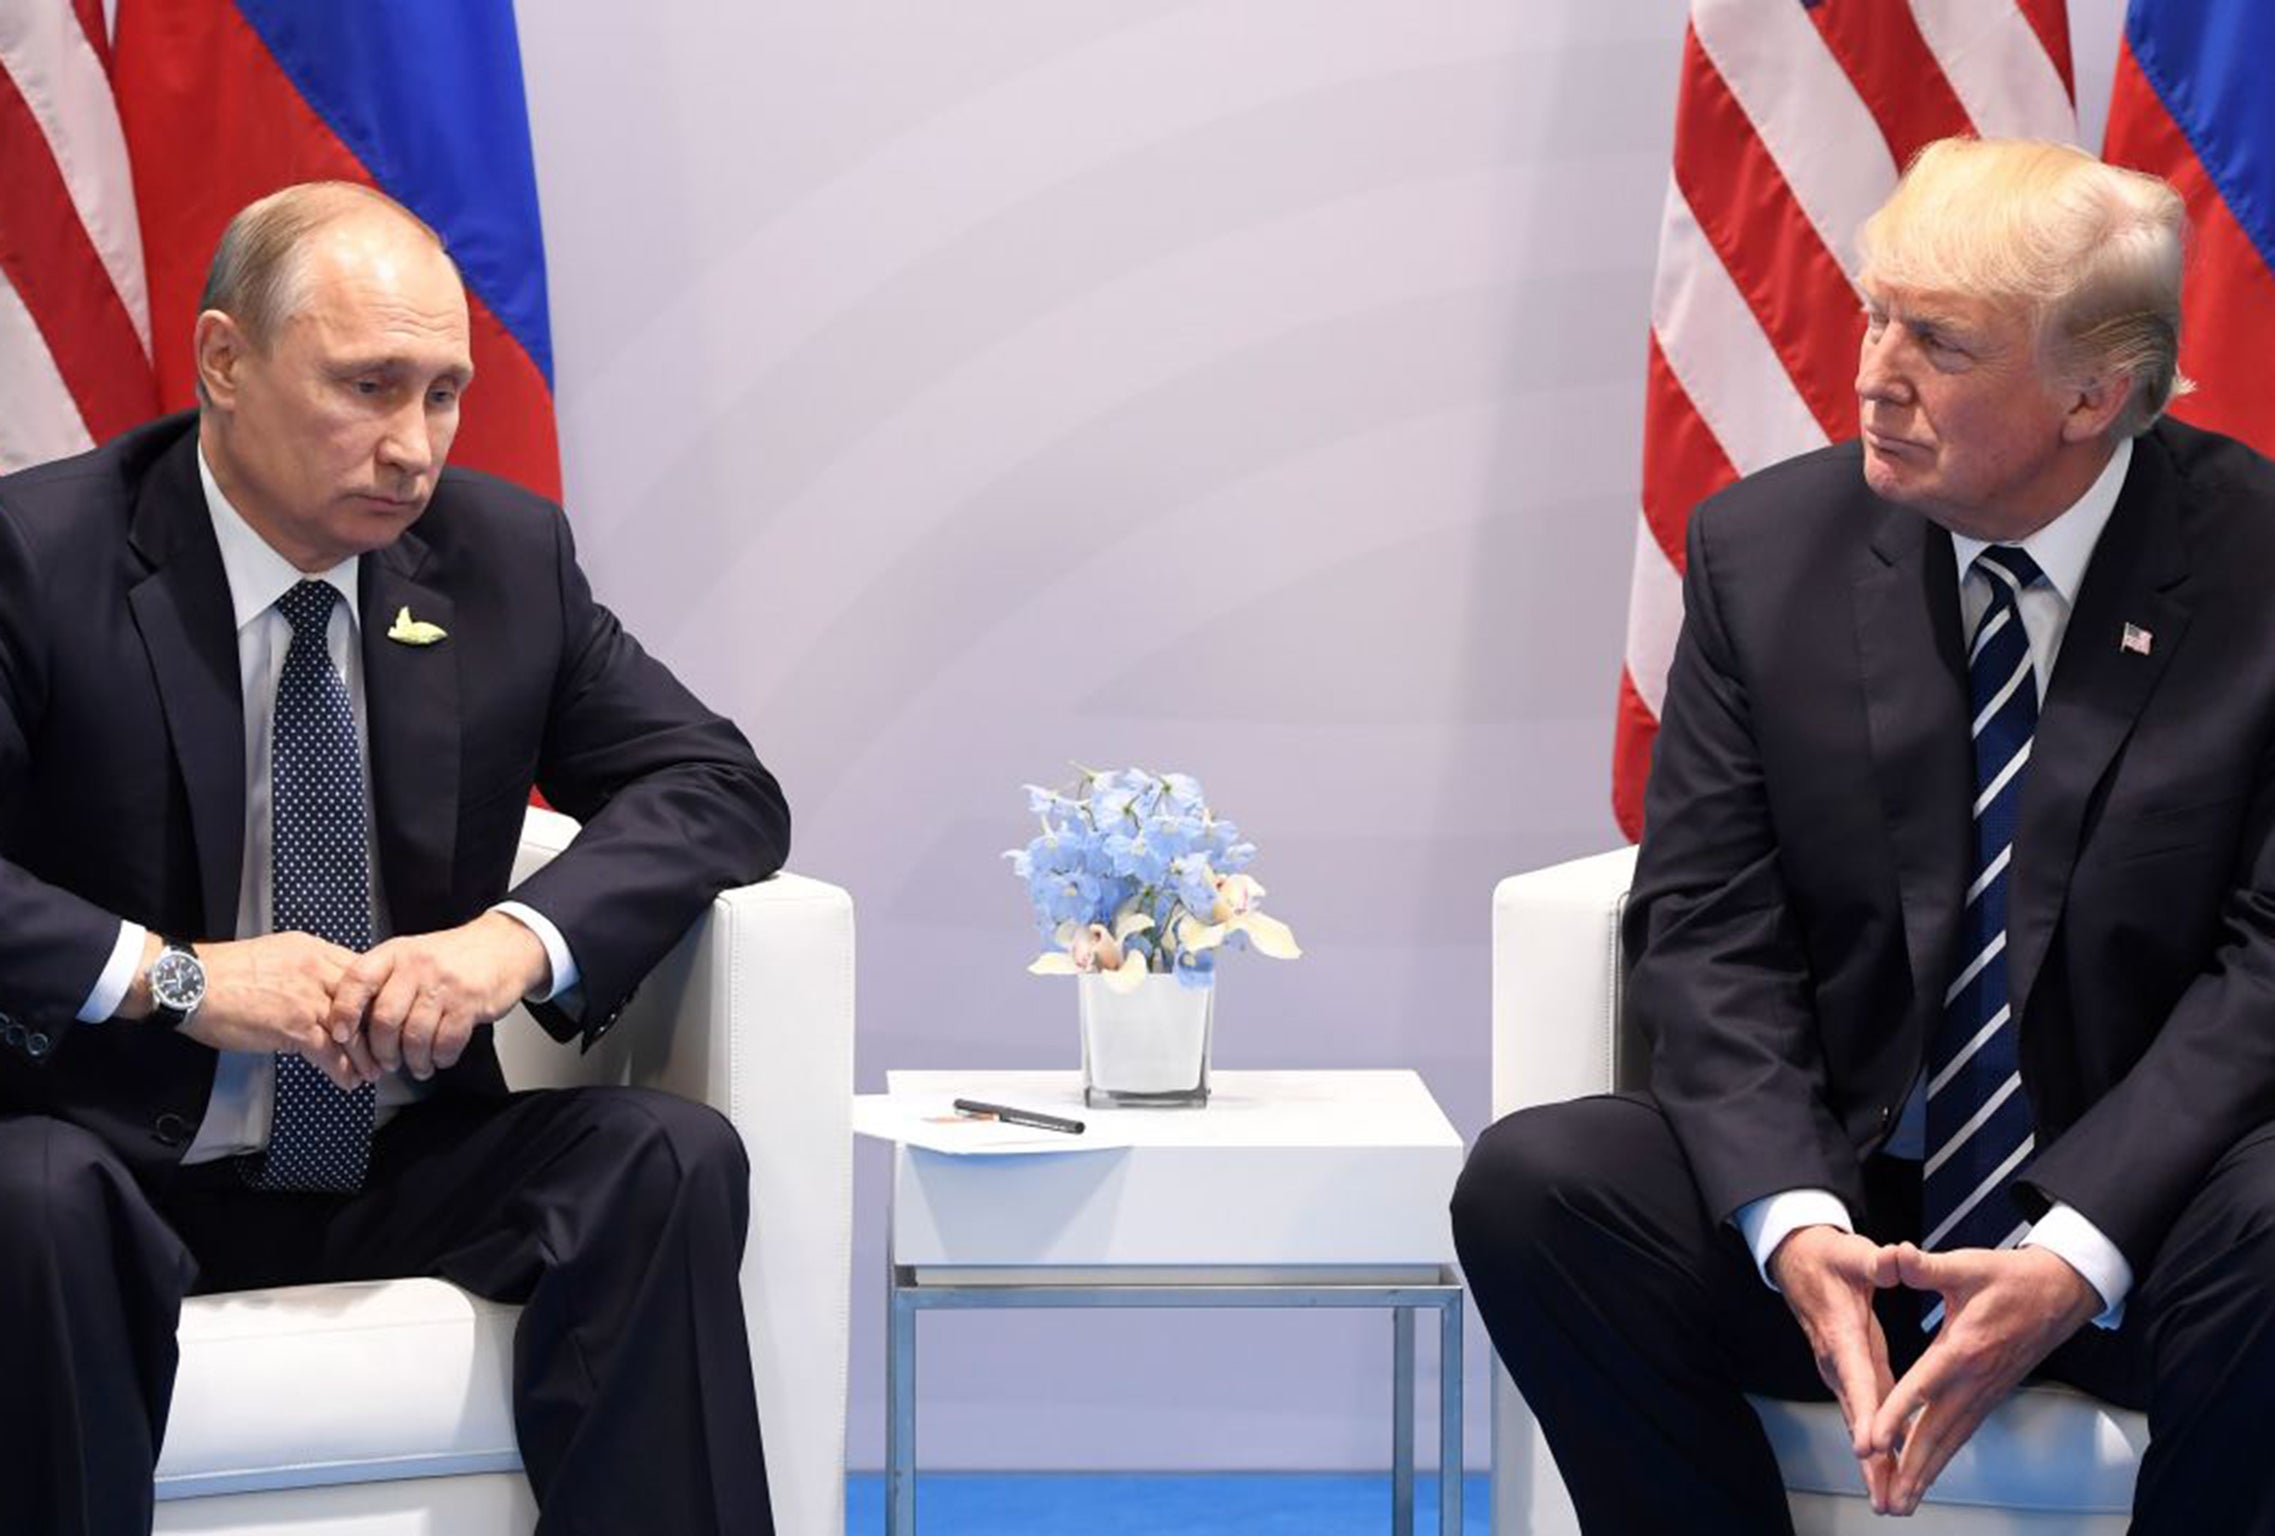 Vladimir Putin and Donald Trump at the G20 Summit in Hamburg last month